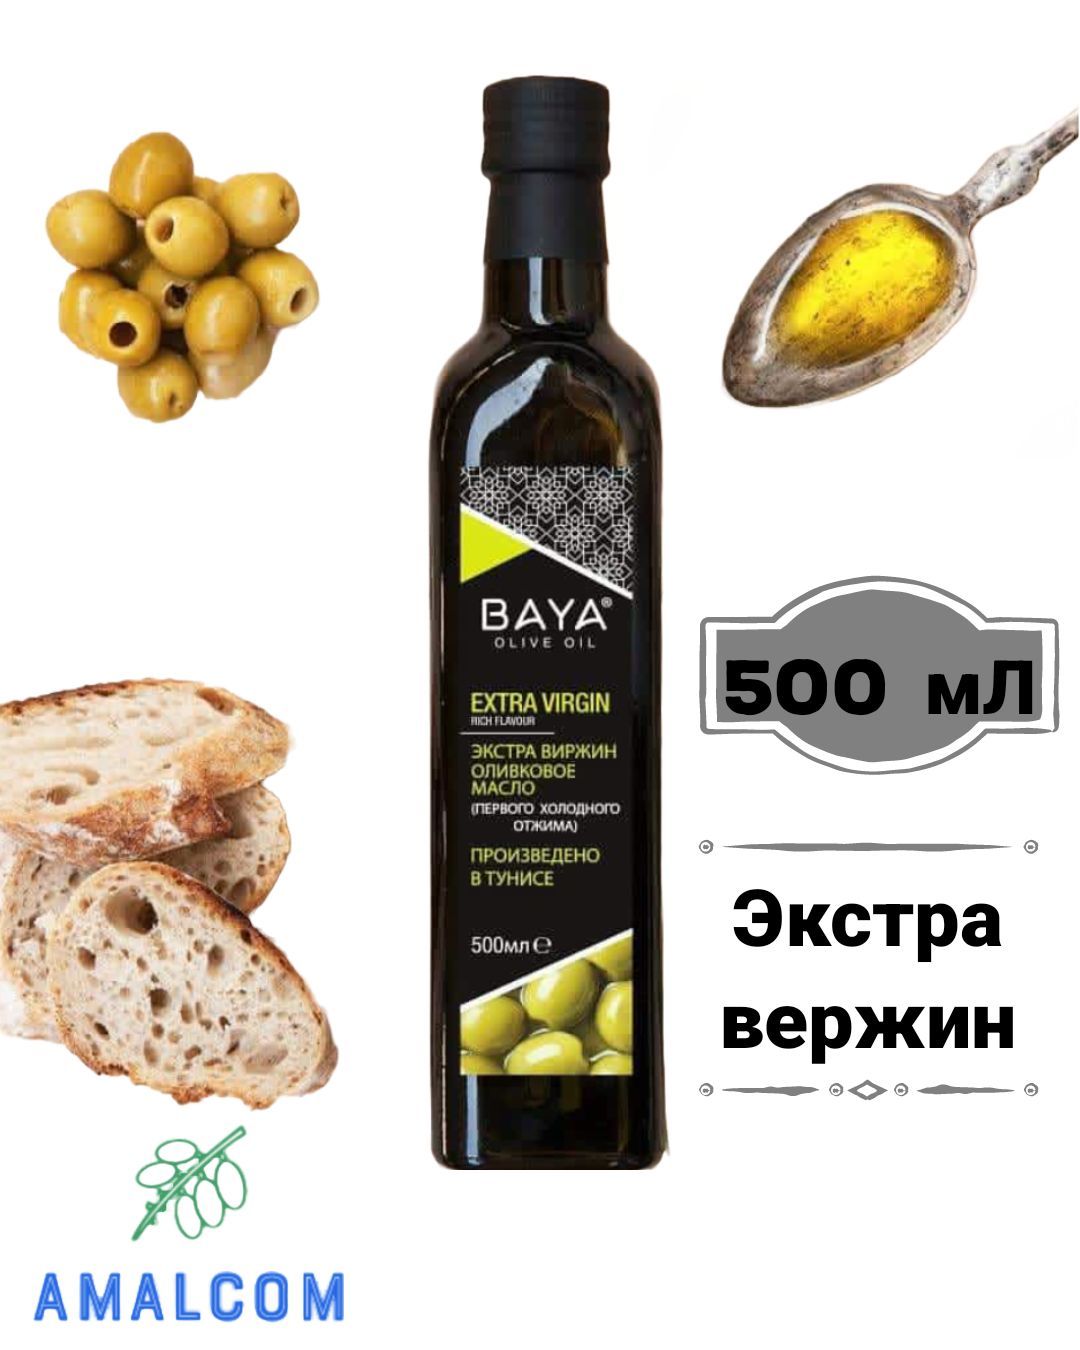 Baya масло оливковое. Бутылка оливкового масла Борхес фрипик. Оливковое масло baya